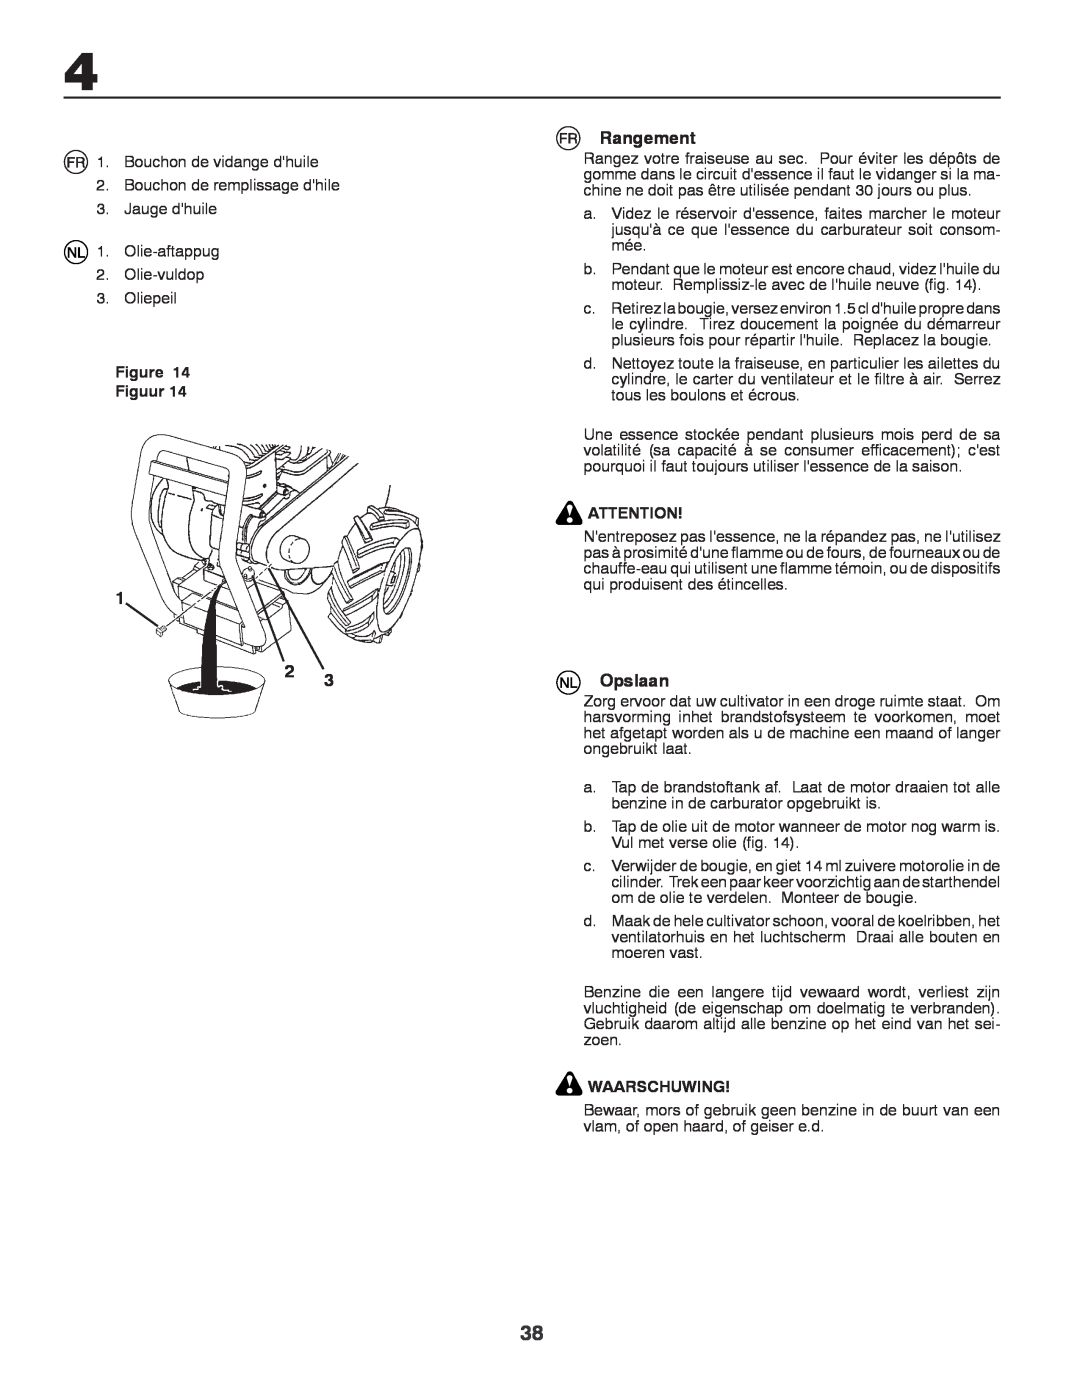 Husqvarna CRT81 instruction manual Rangement, Opslaan, Figuur, Waarschuwing 